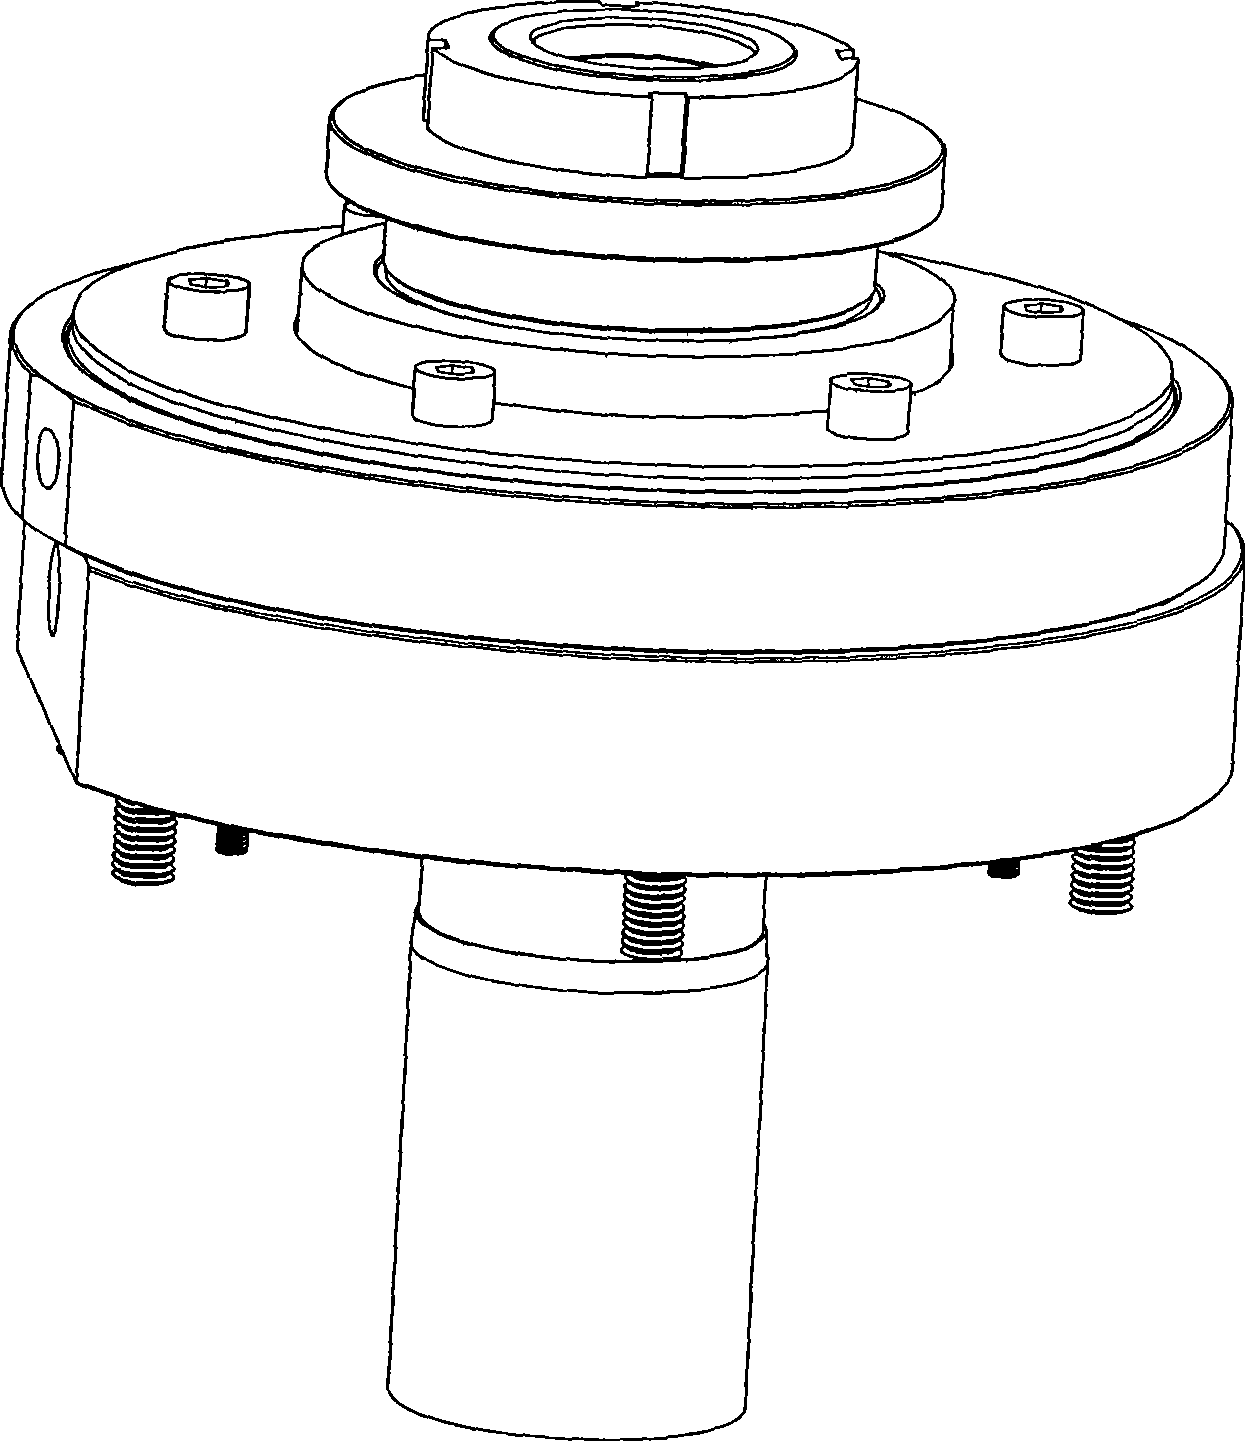 Apparatus for locking main shaft